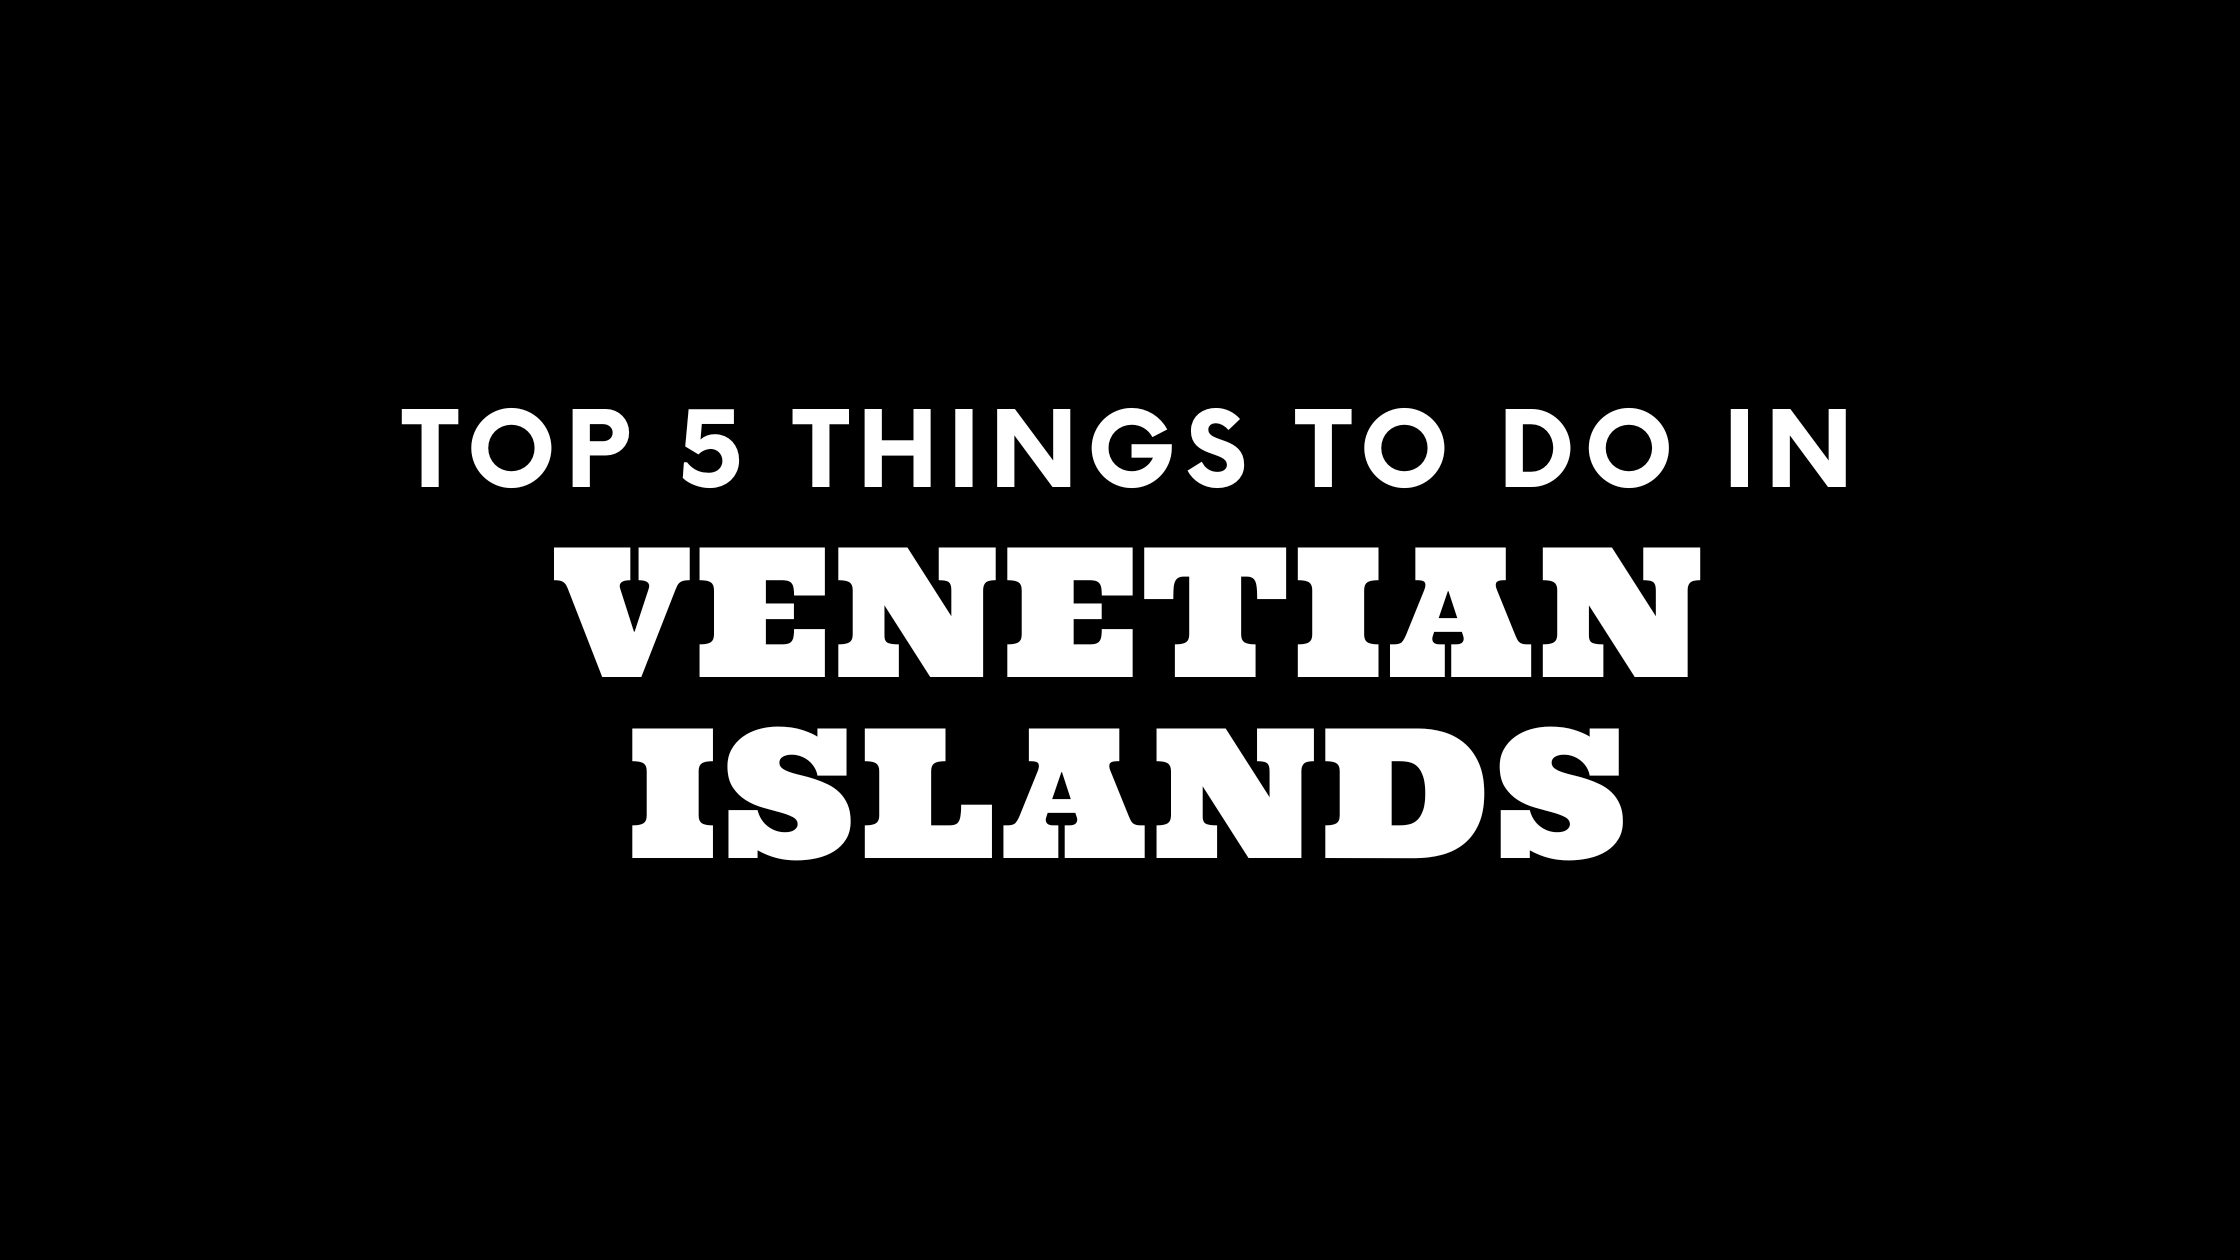 Top 5 Things To Do in Venetian Islands